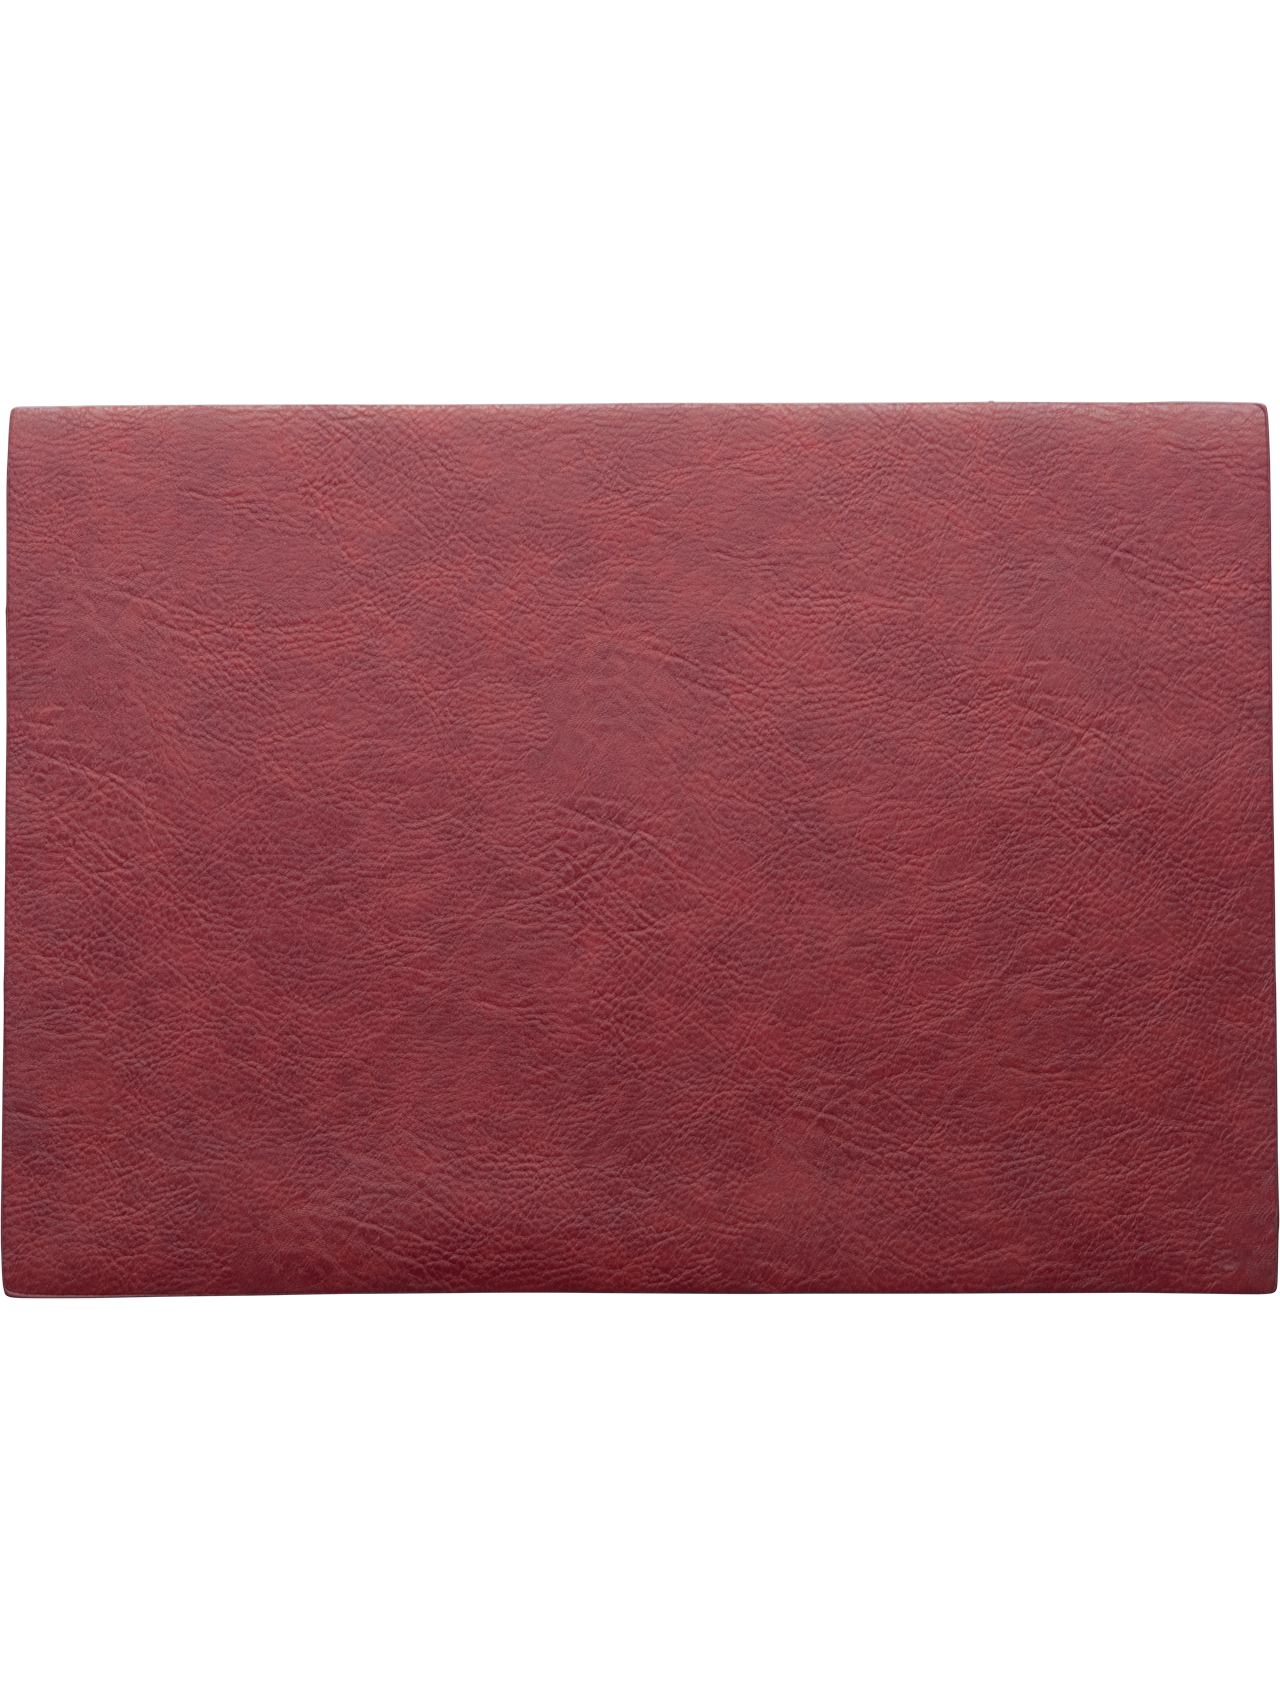 ASA leather optic Tischset eckig rosewood 46 x 33 cm PU